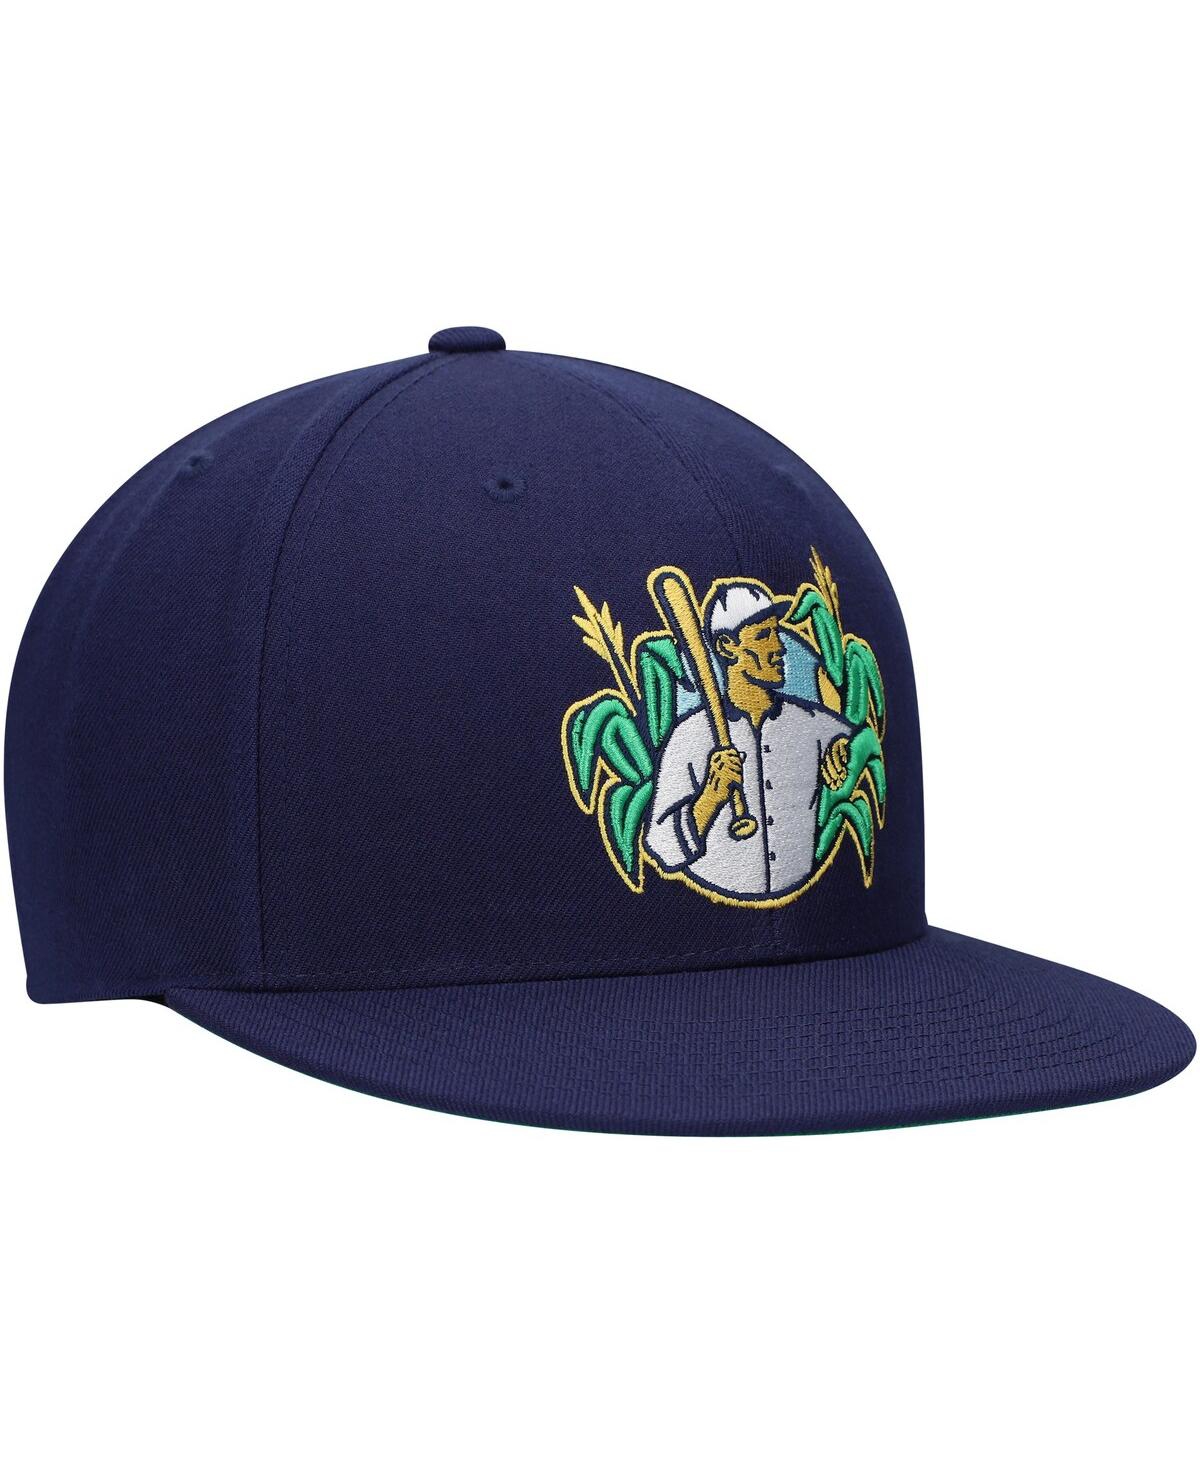 Shop Baseballism Men's  Navy Field Of Dreams People Will Come Snapback Hat